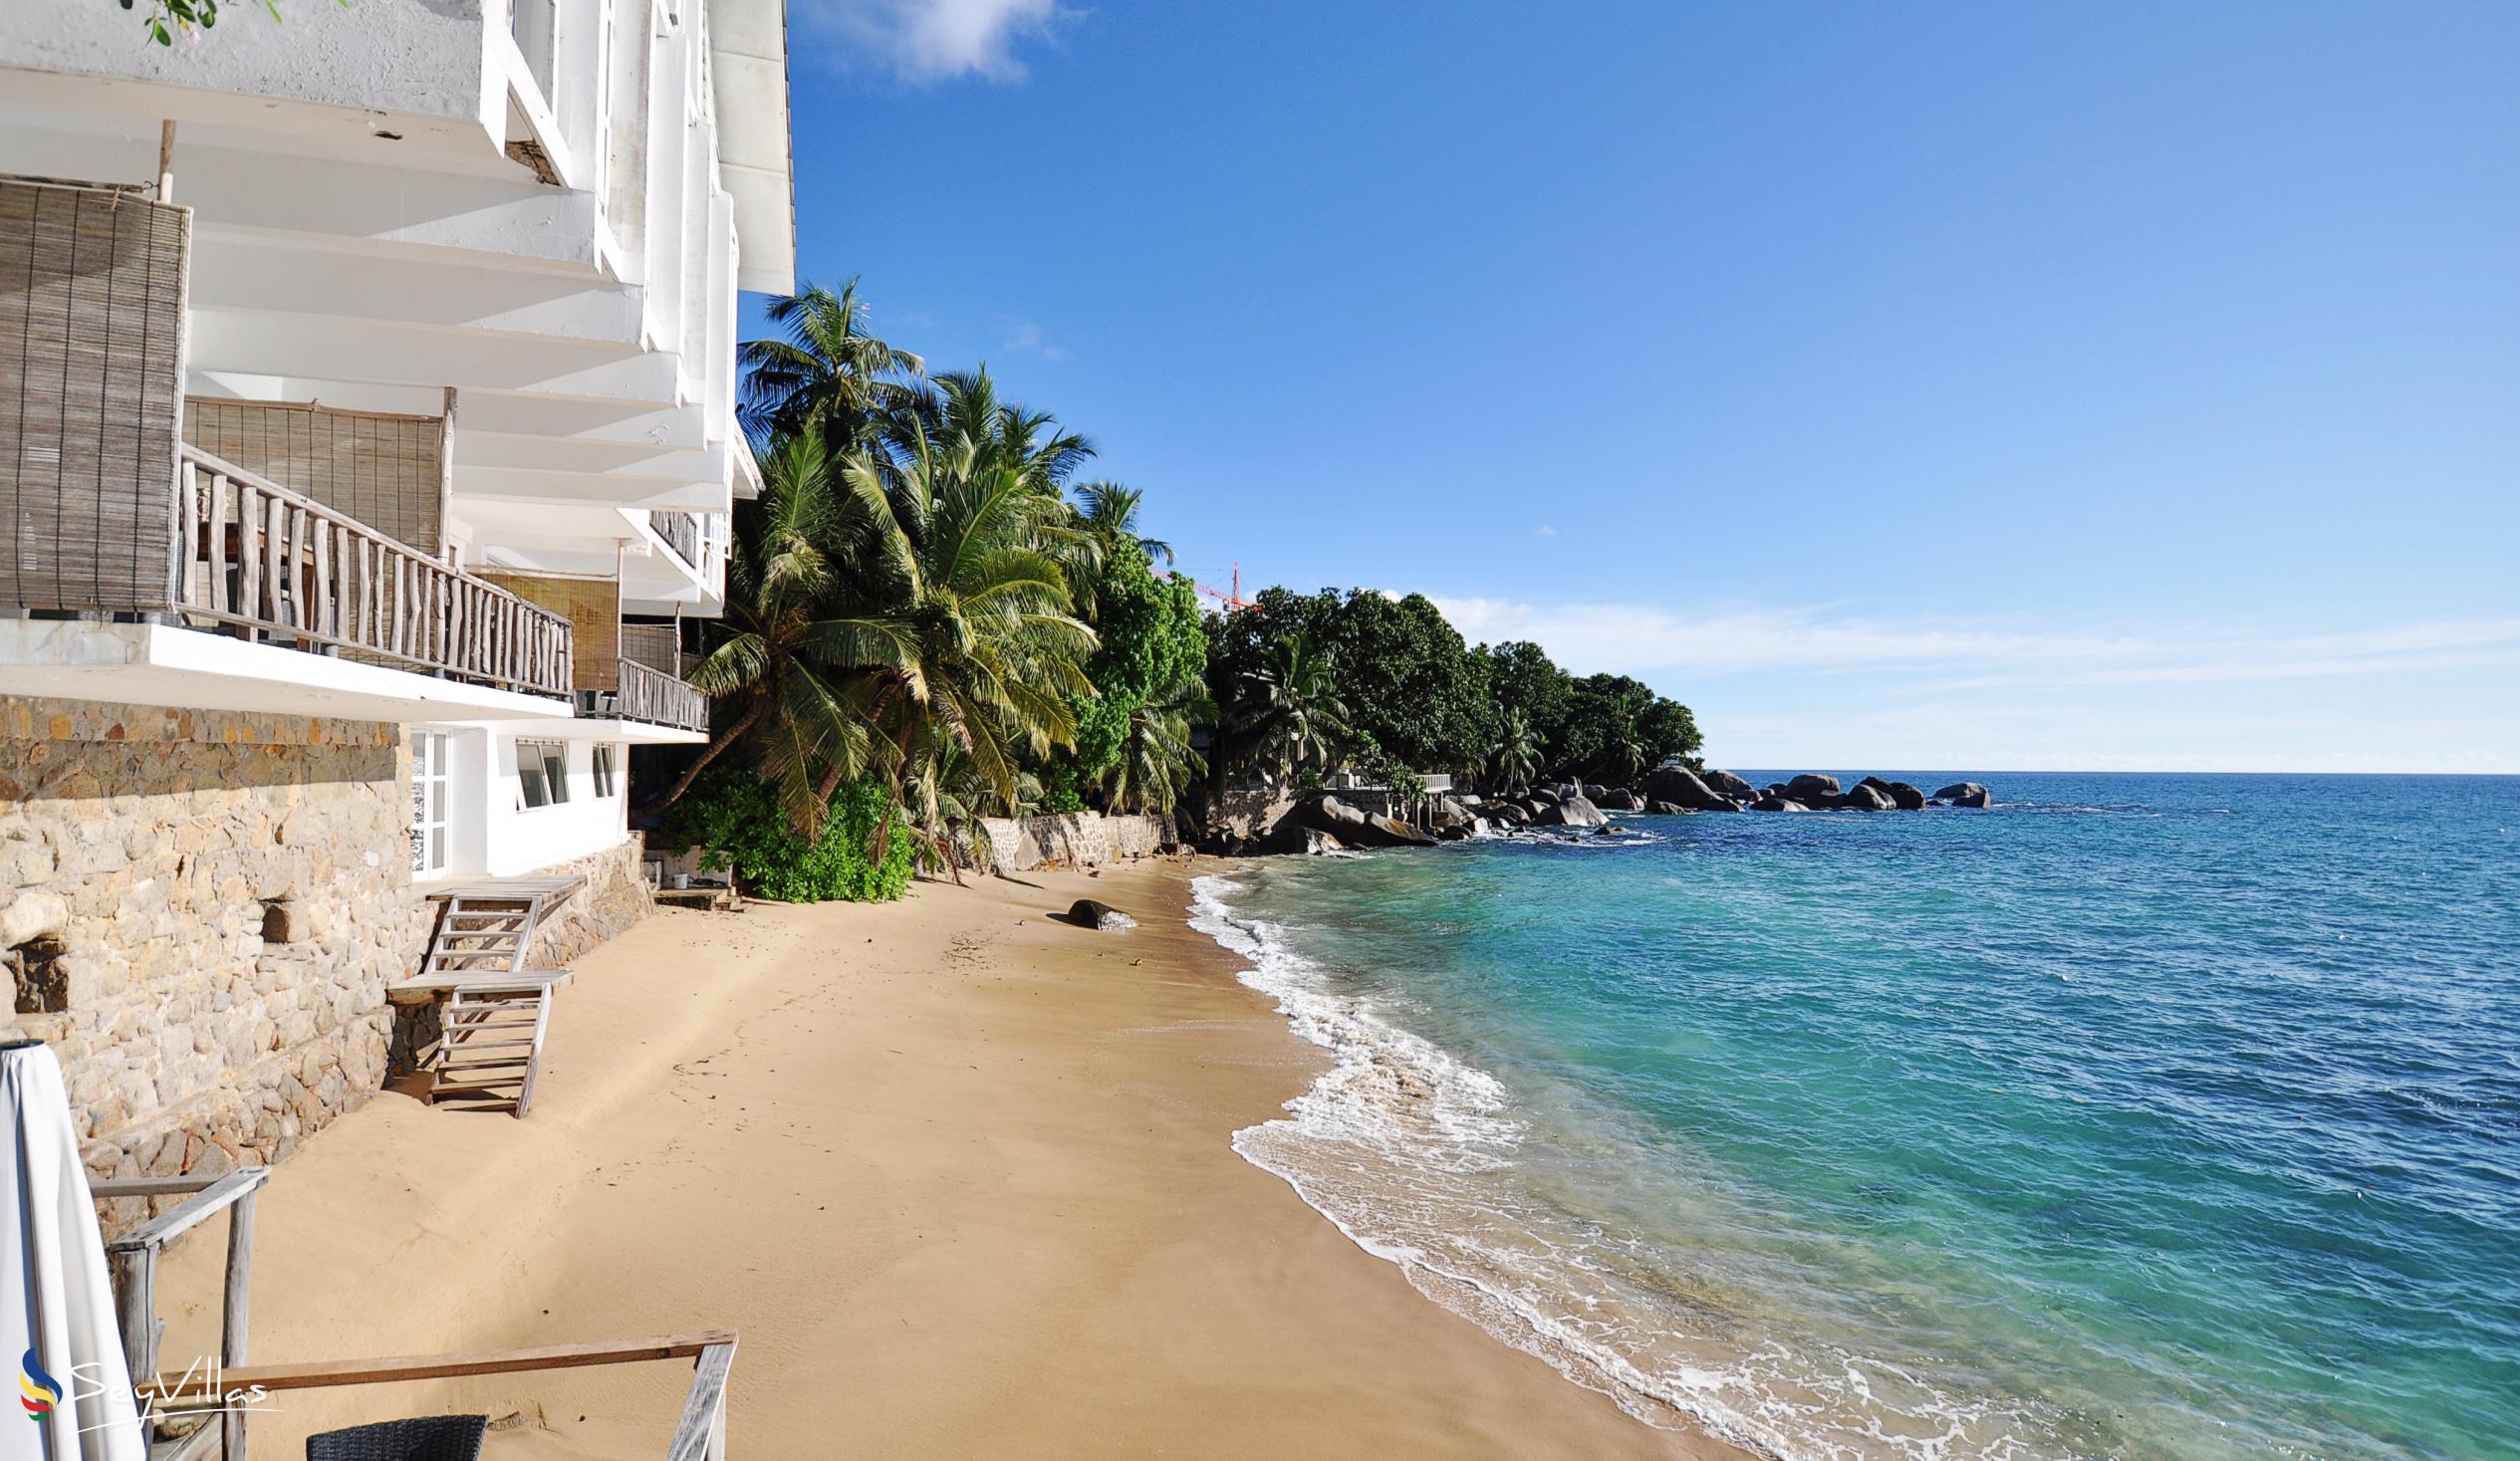 Photo 3: Bliss Hotel - Outdoor area - Mahé (Seychelles)